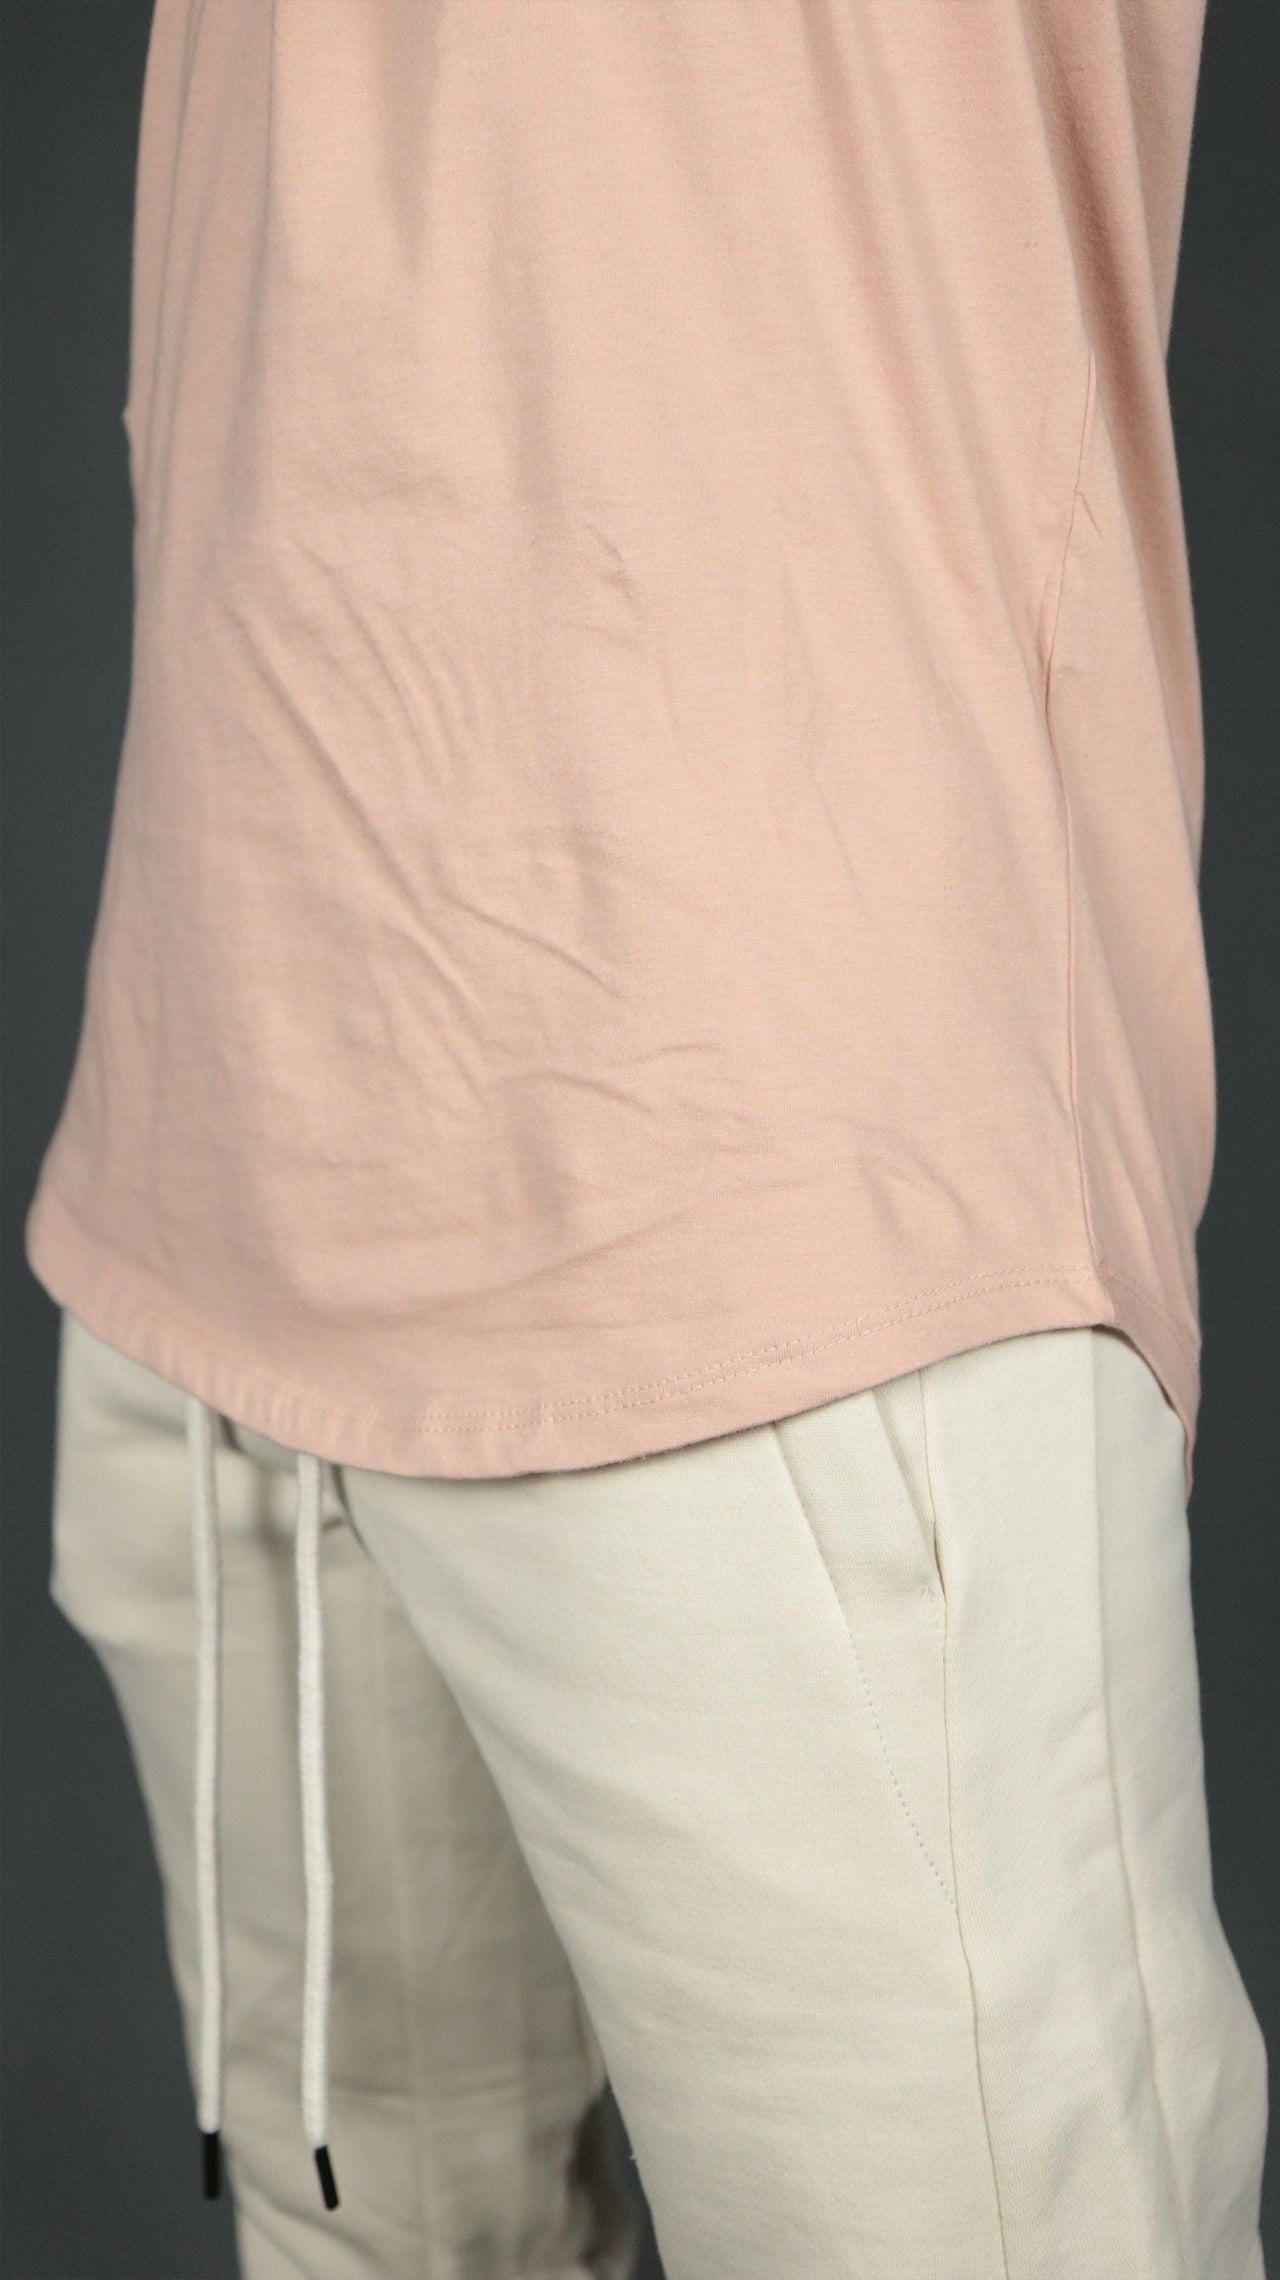 The scoop bottom of the pink men's longline t-shirt by Jordan Craig.